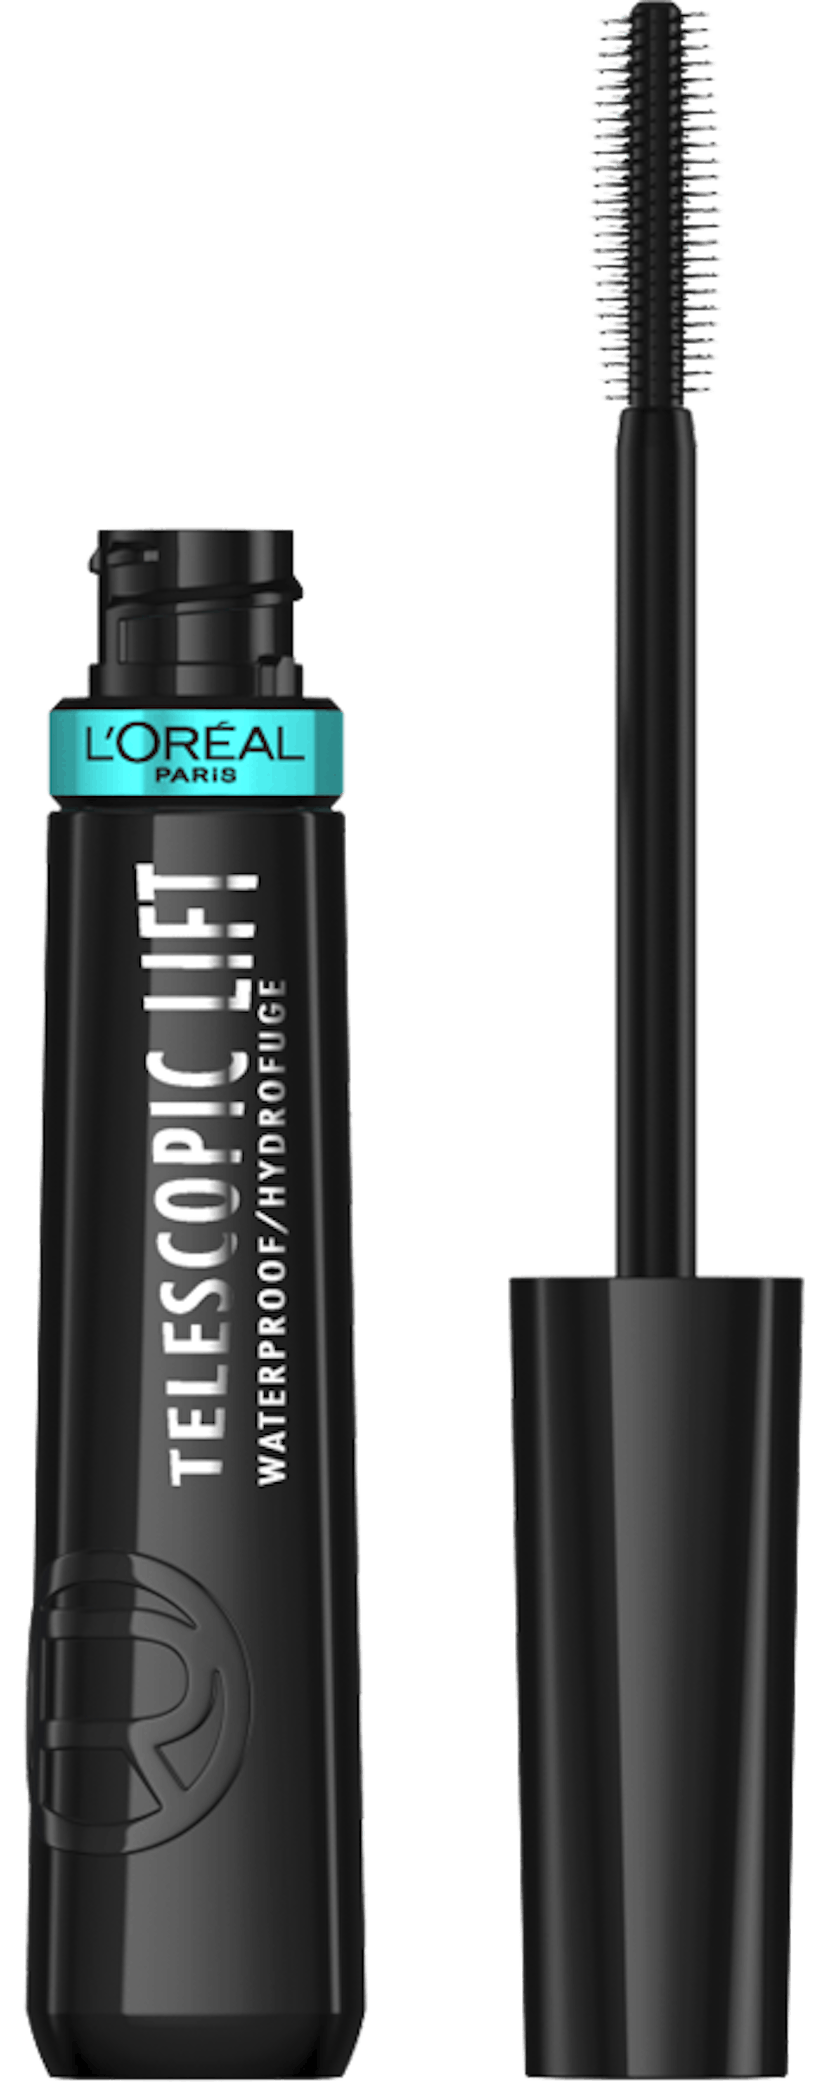 Telescopic Instant Lift Waterproof Mascara